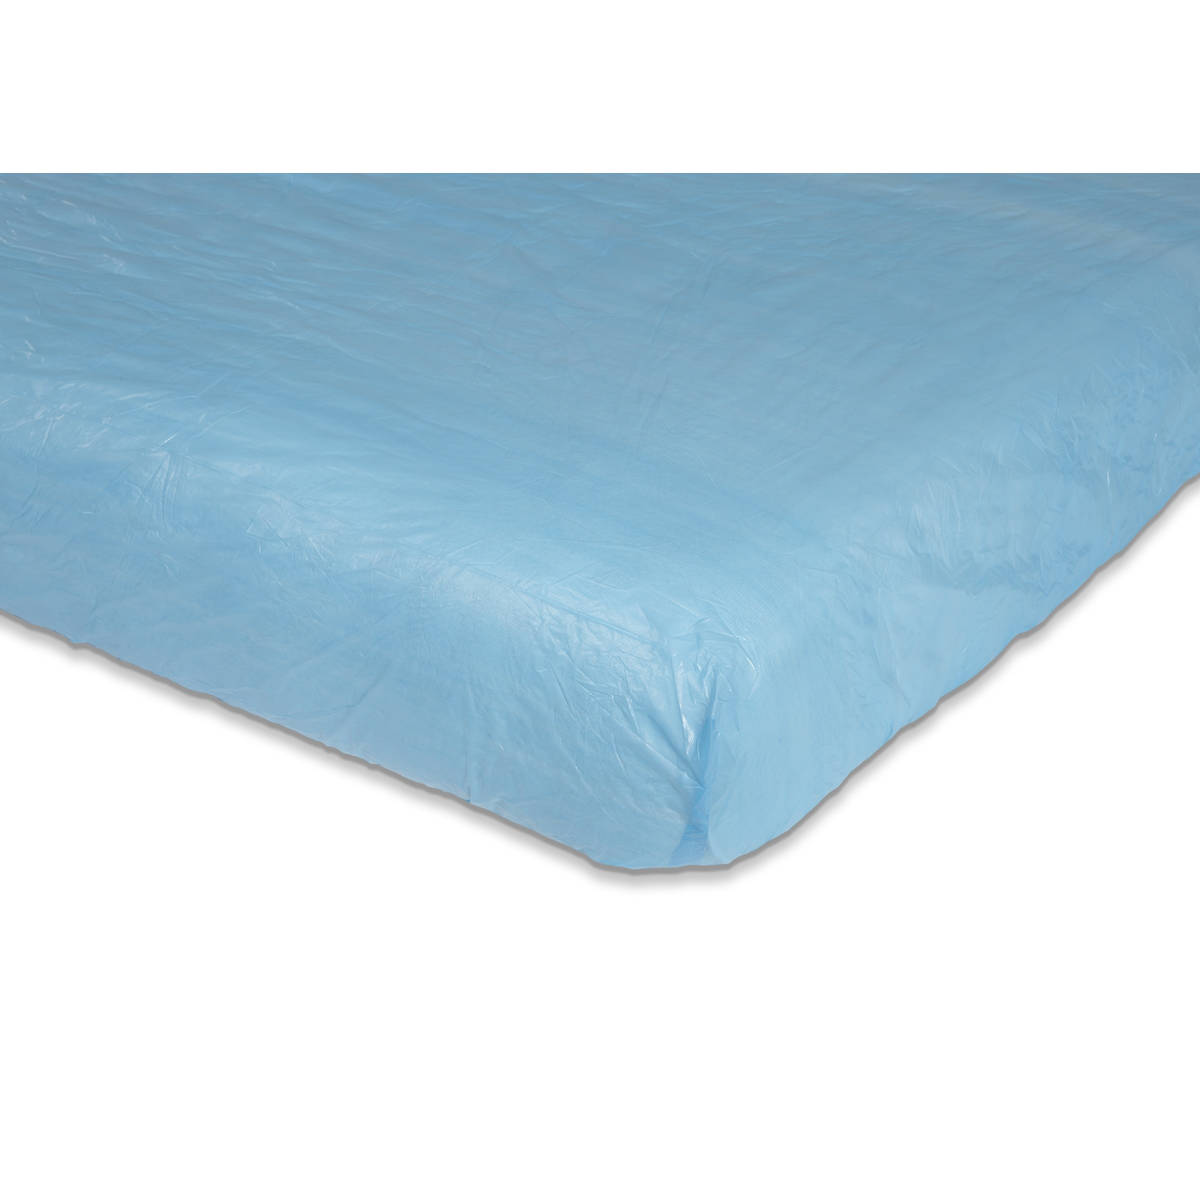 Blue mattress protector corner